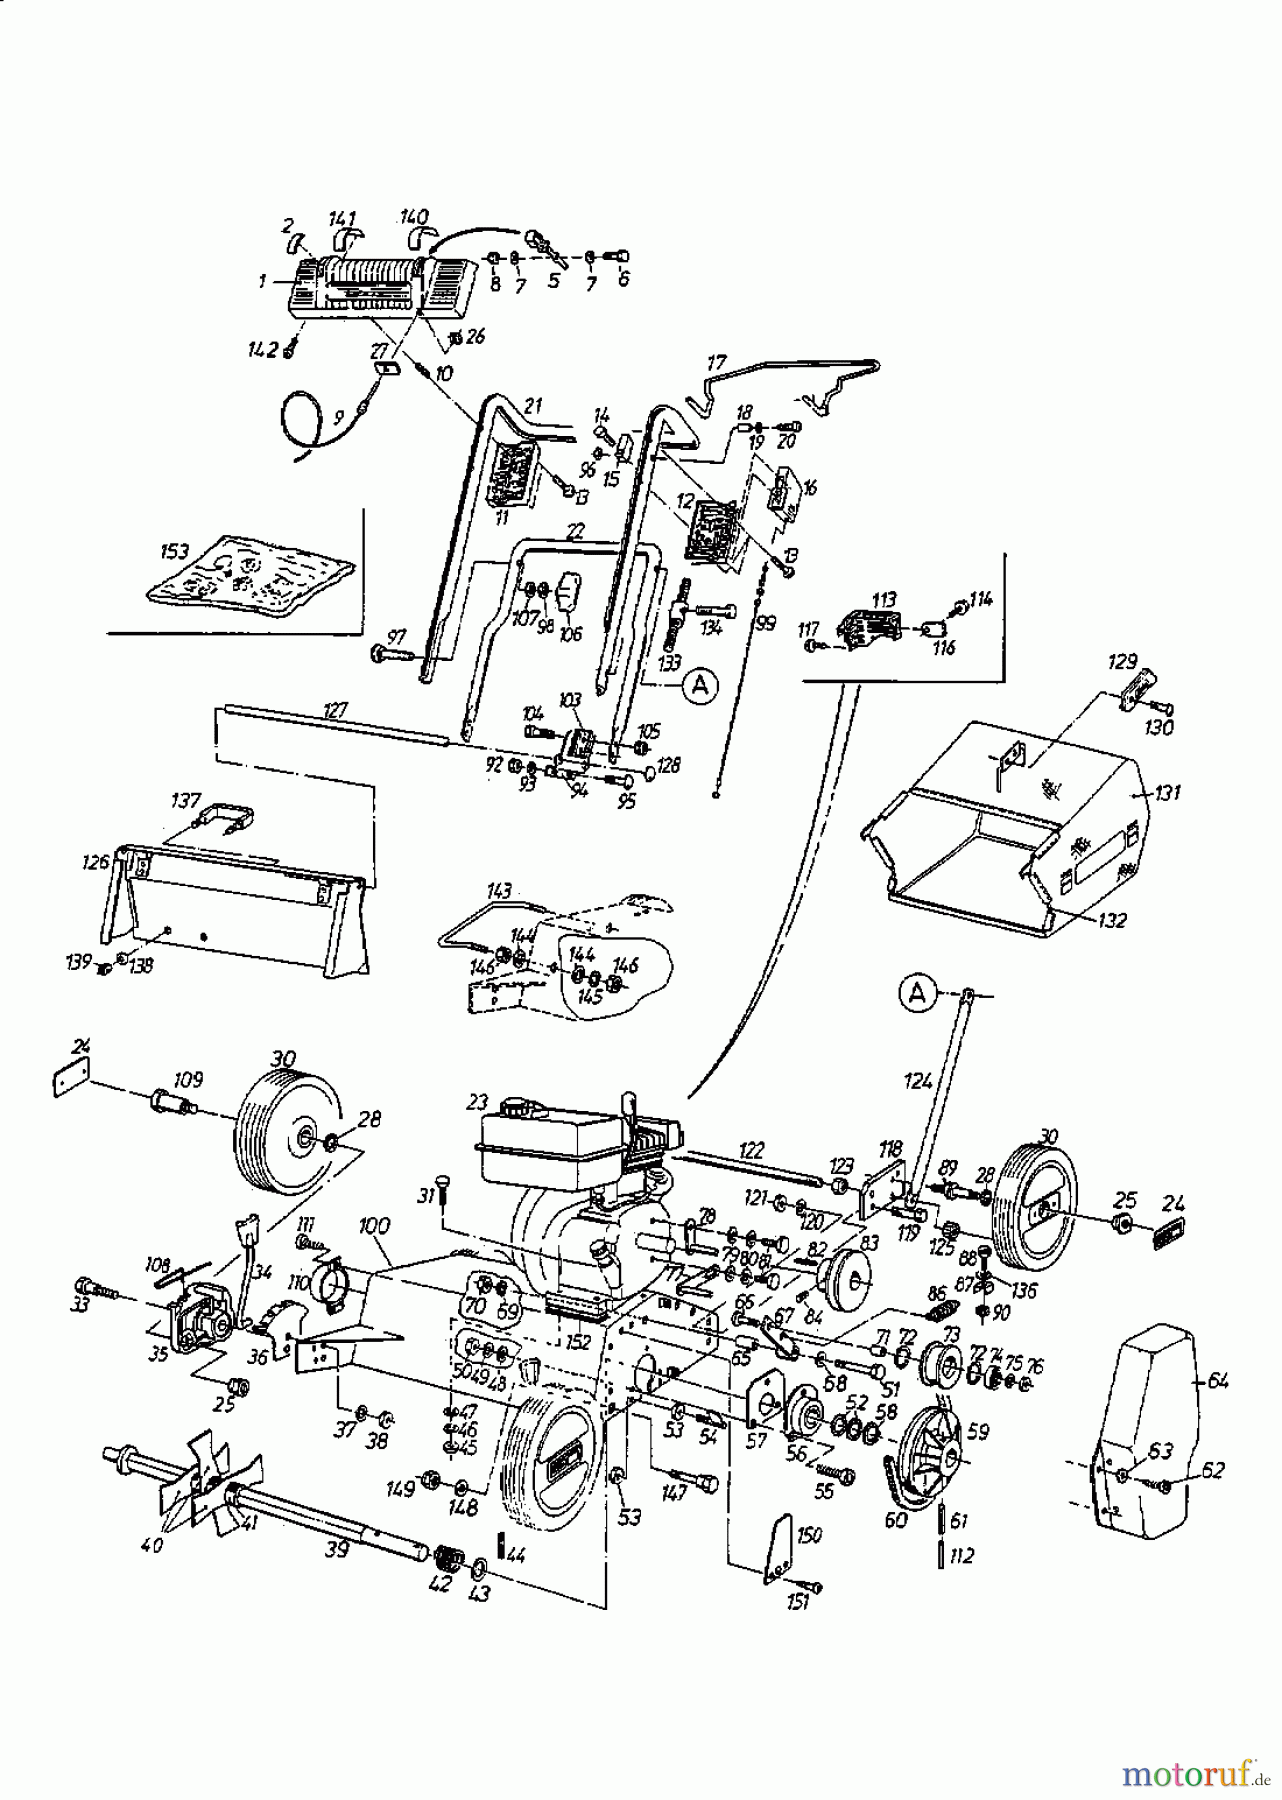  Gutbrod Petrol verticutter MV 404 16APL01U690  (2001) Basic machine